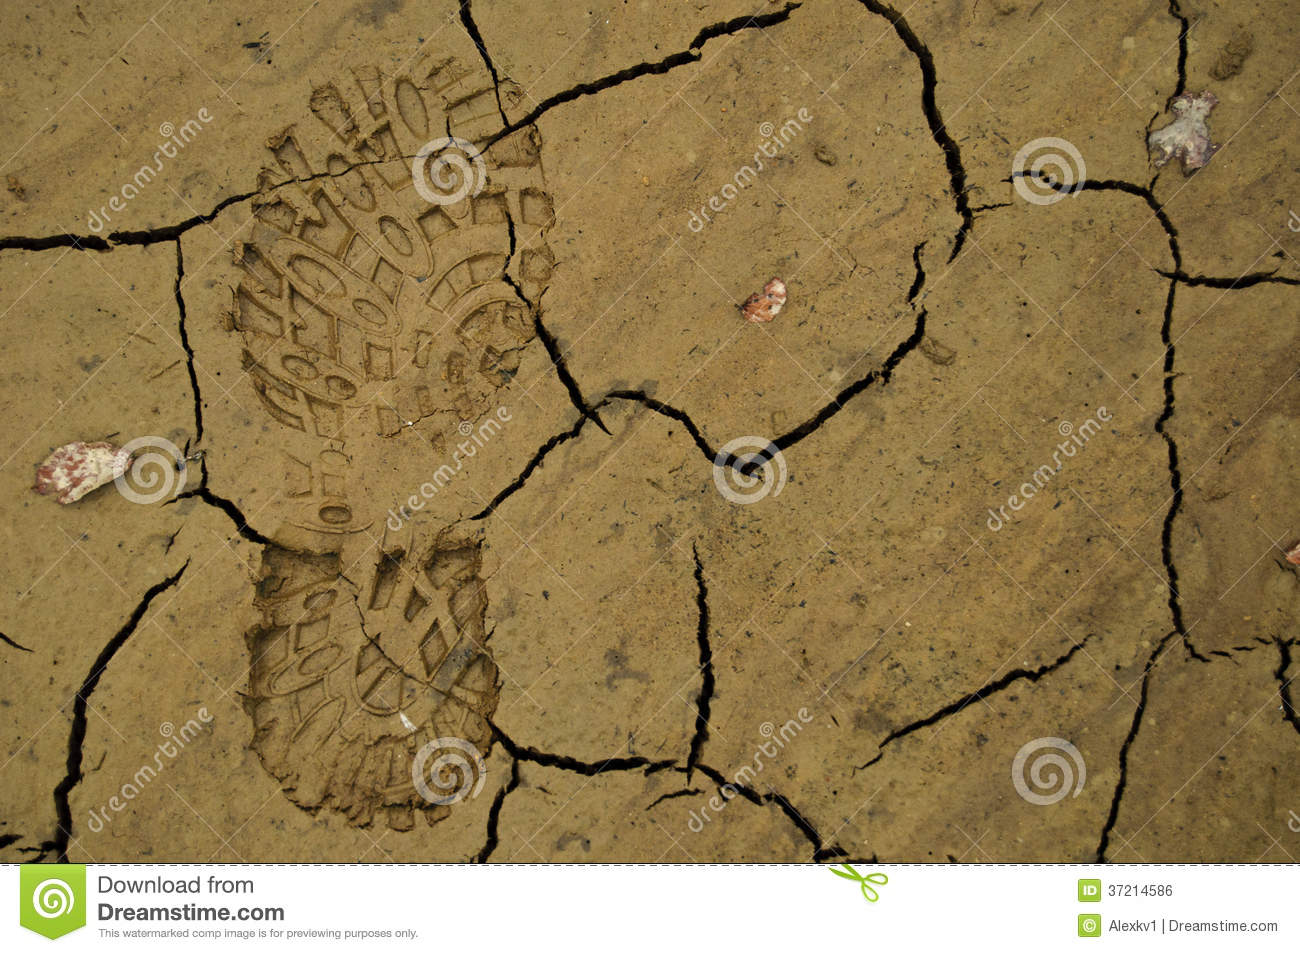 Shoe Footprint In Mud Royalty Free Stock Image   Image  37214586